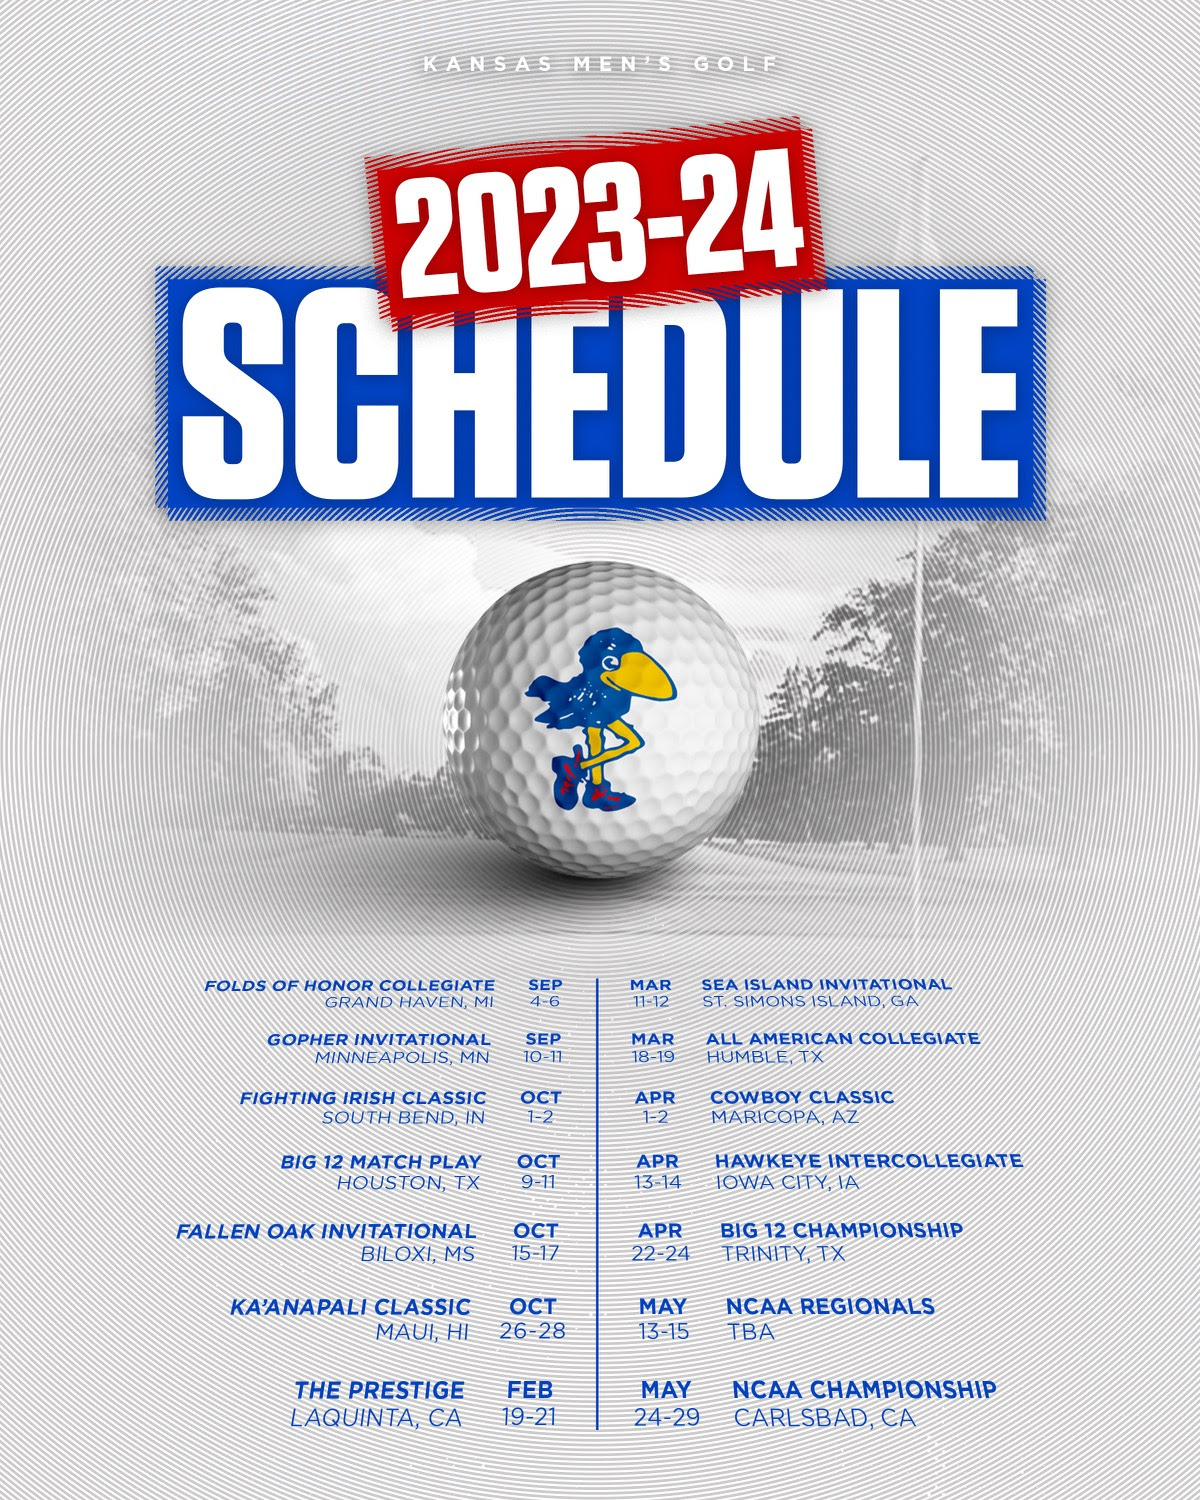 St. Louis Blues release 2023-24 schedule